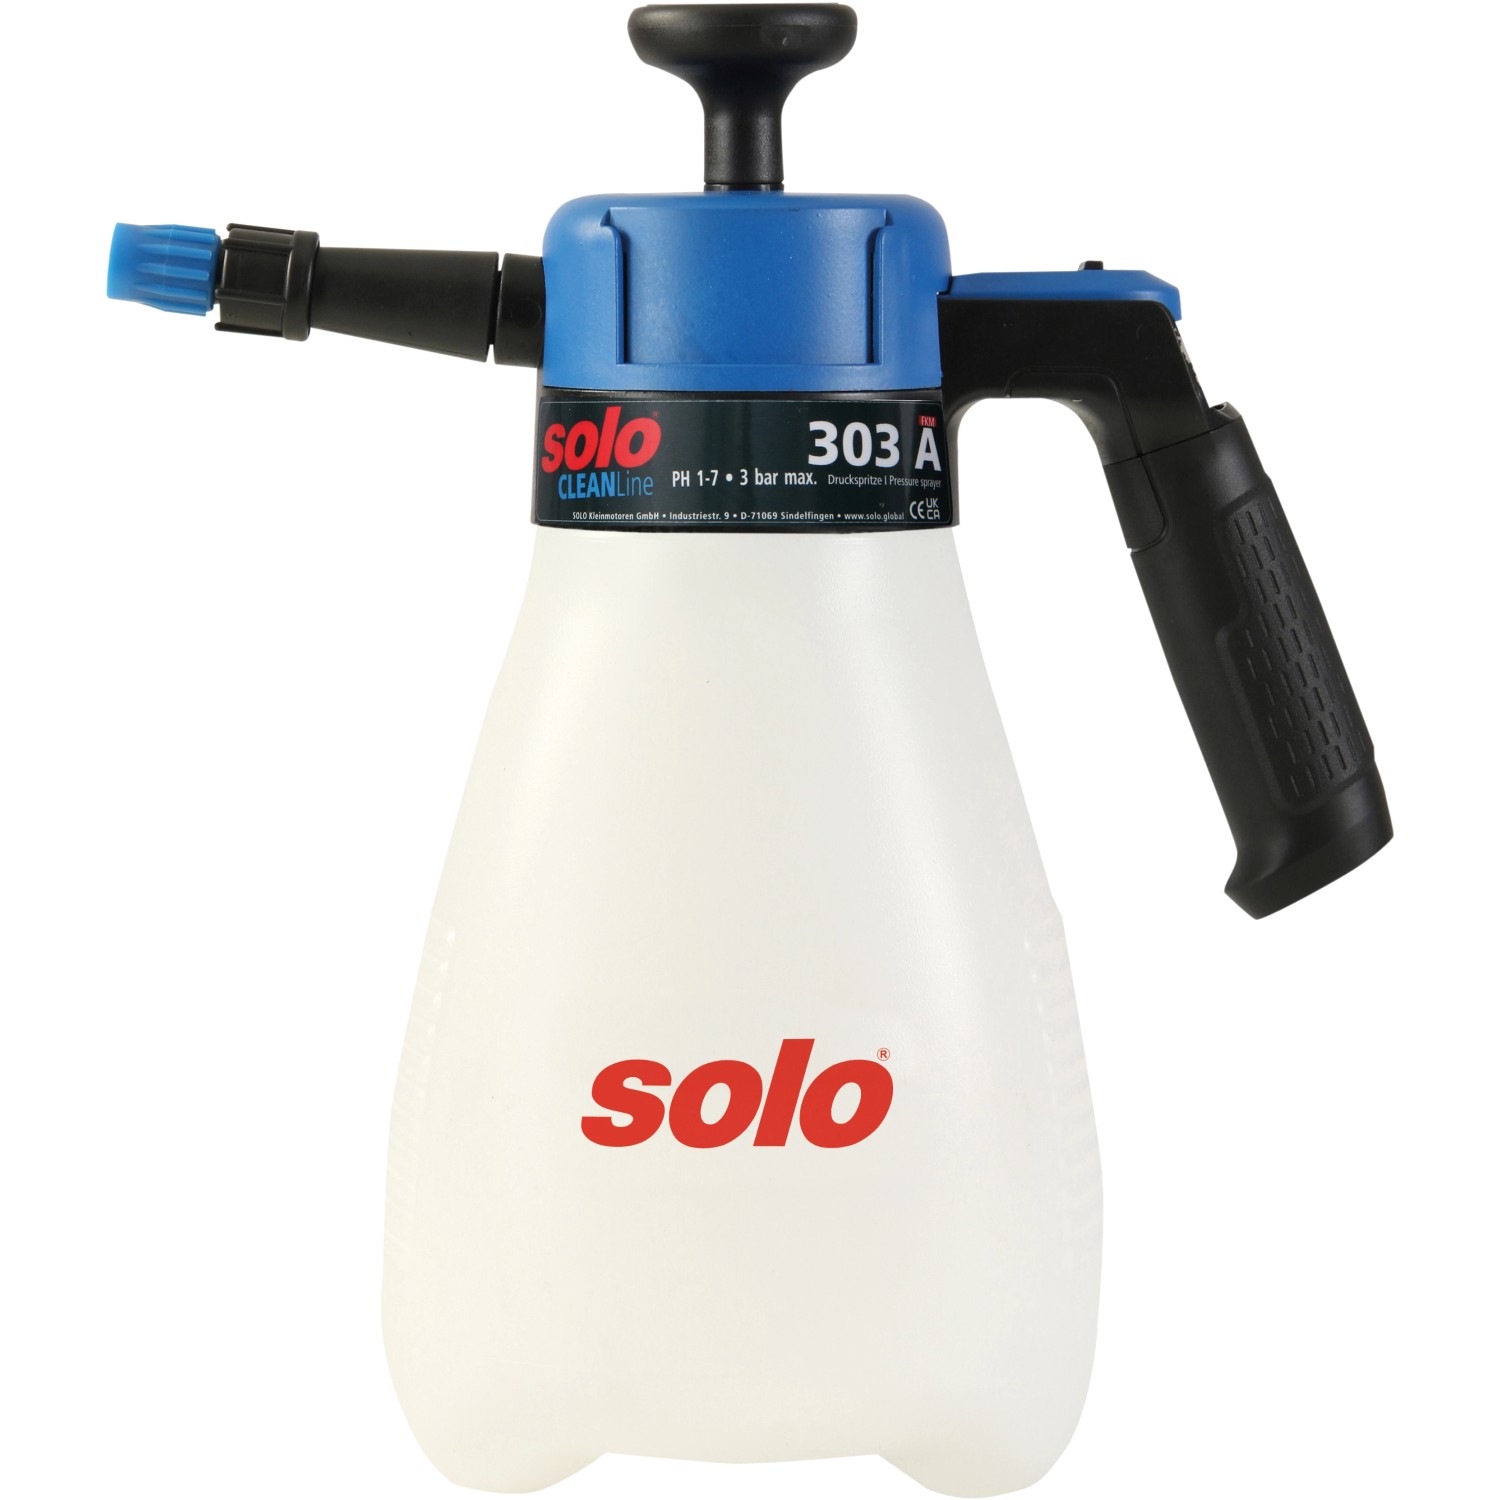 Solo Handruckspritze 303 A Cleanline 1,25 l